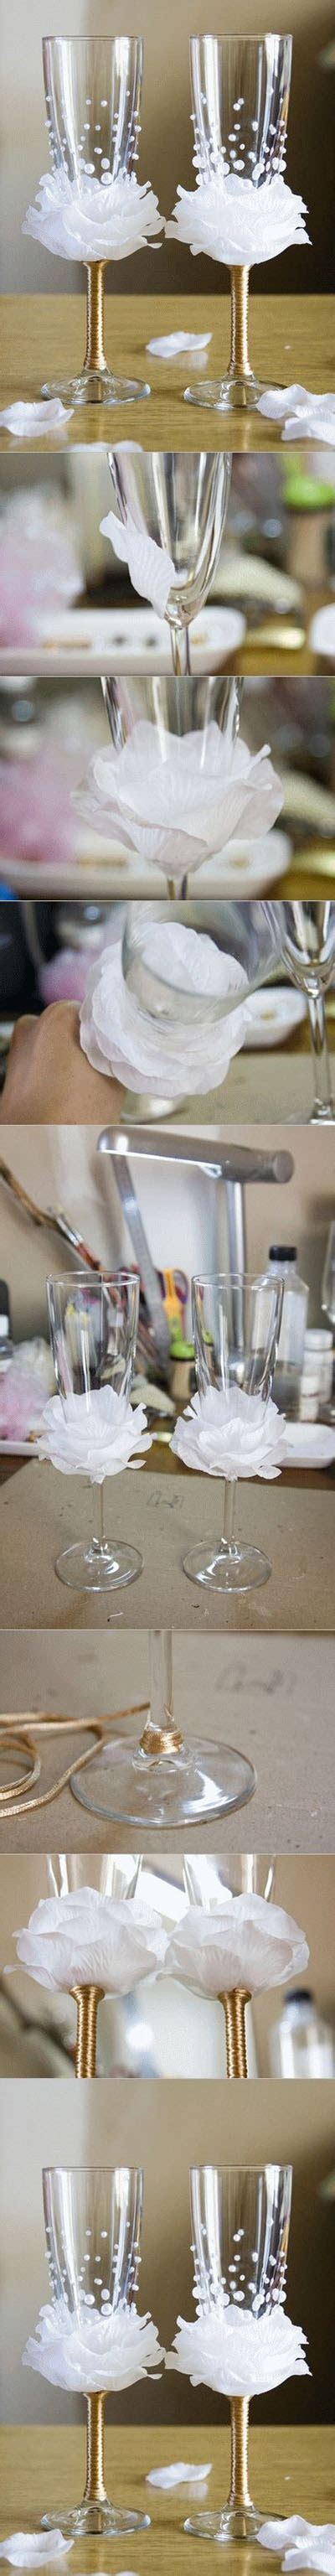 Diy Flower Bead Decorated Wine Glasses Useful Tutorials